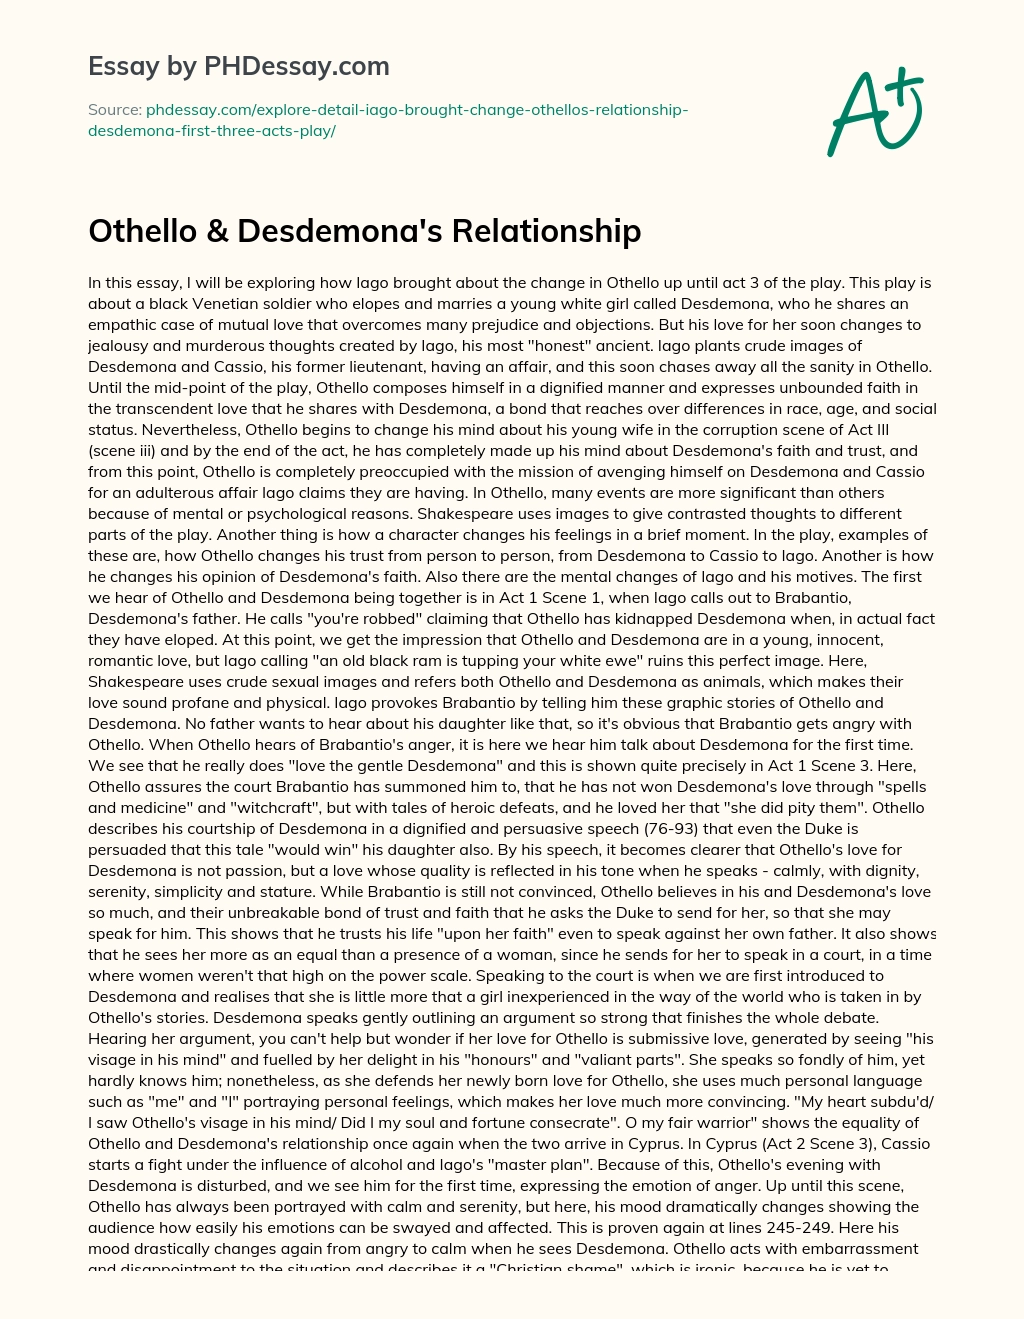 Othello & Desdemona’s Relationship essay